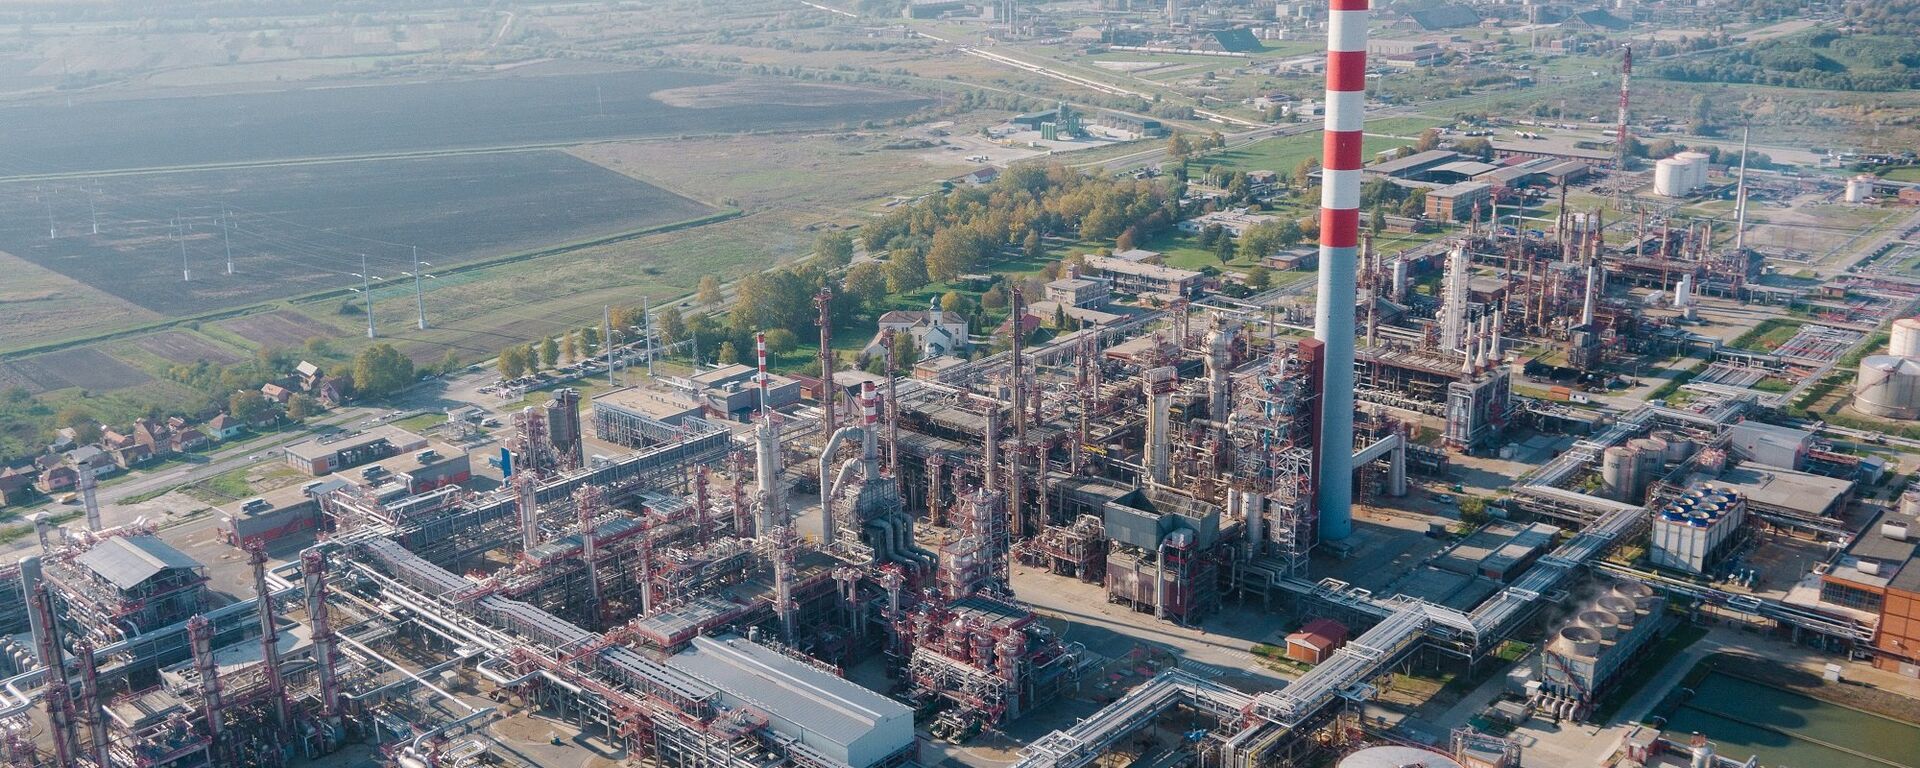 Rafinerija nafte u Pančevu - Sputnik Srbija, 1920, 13.10.2021